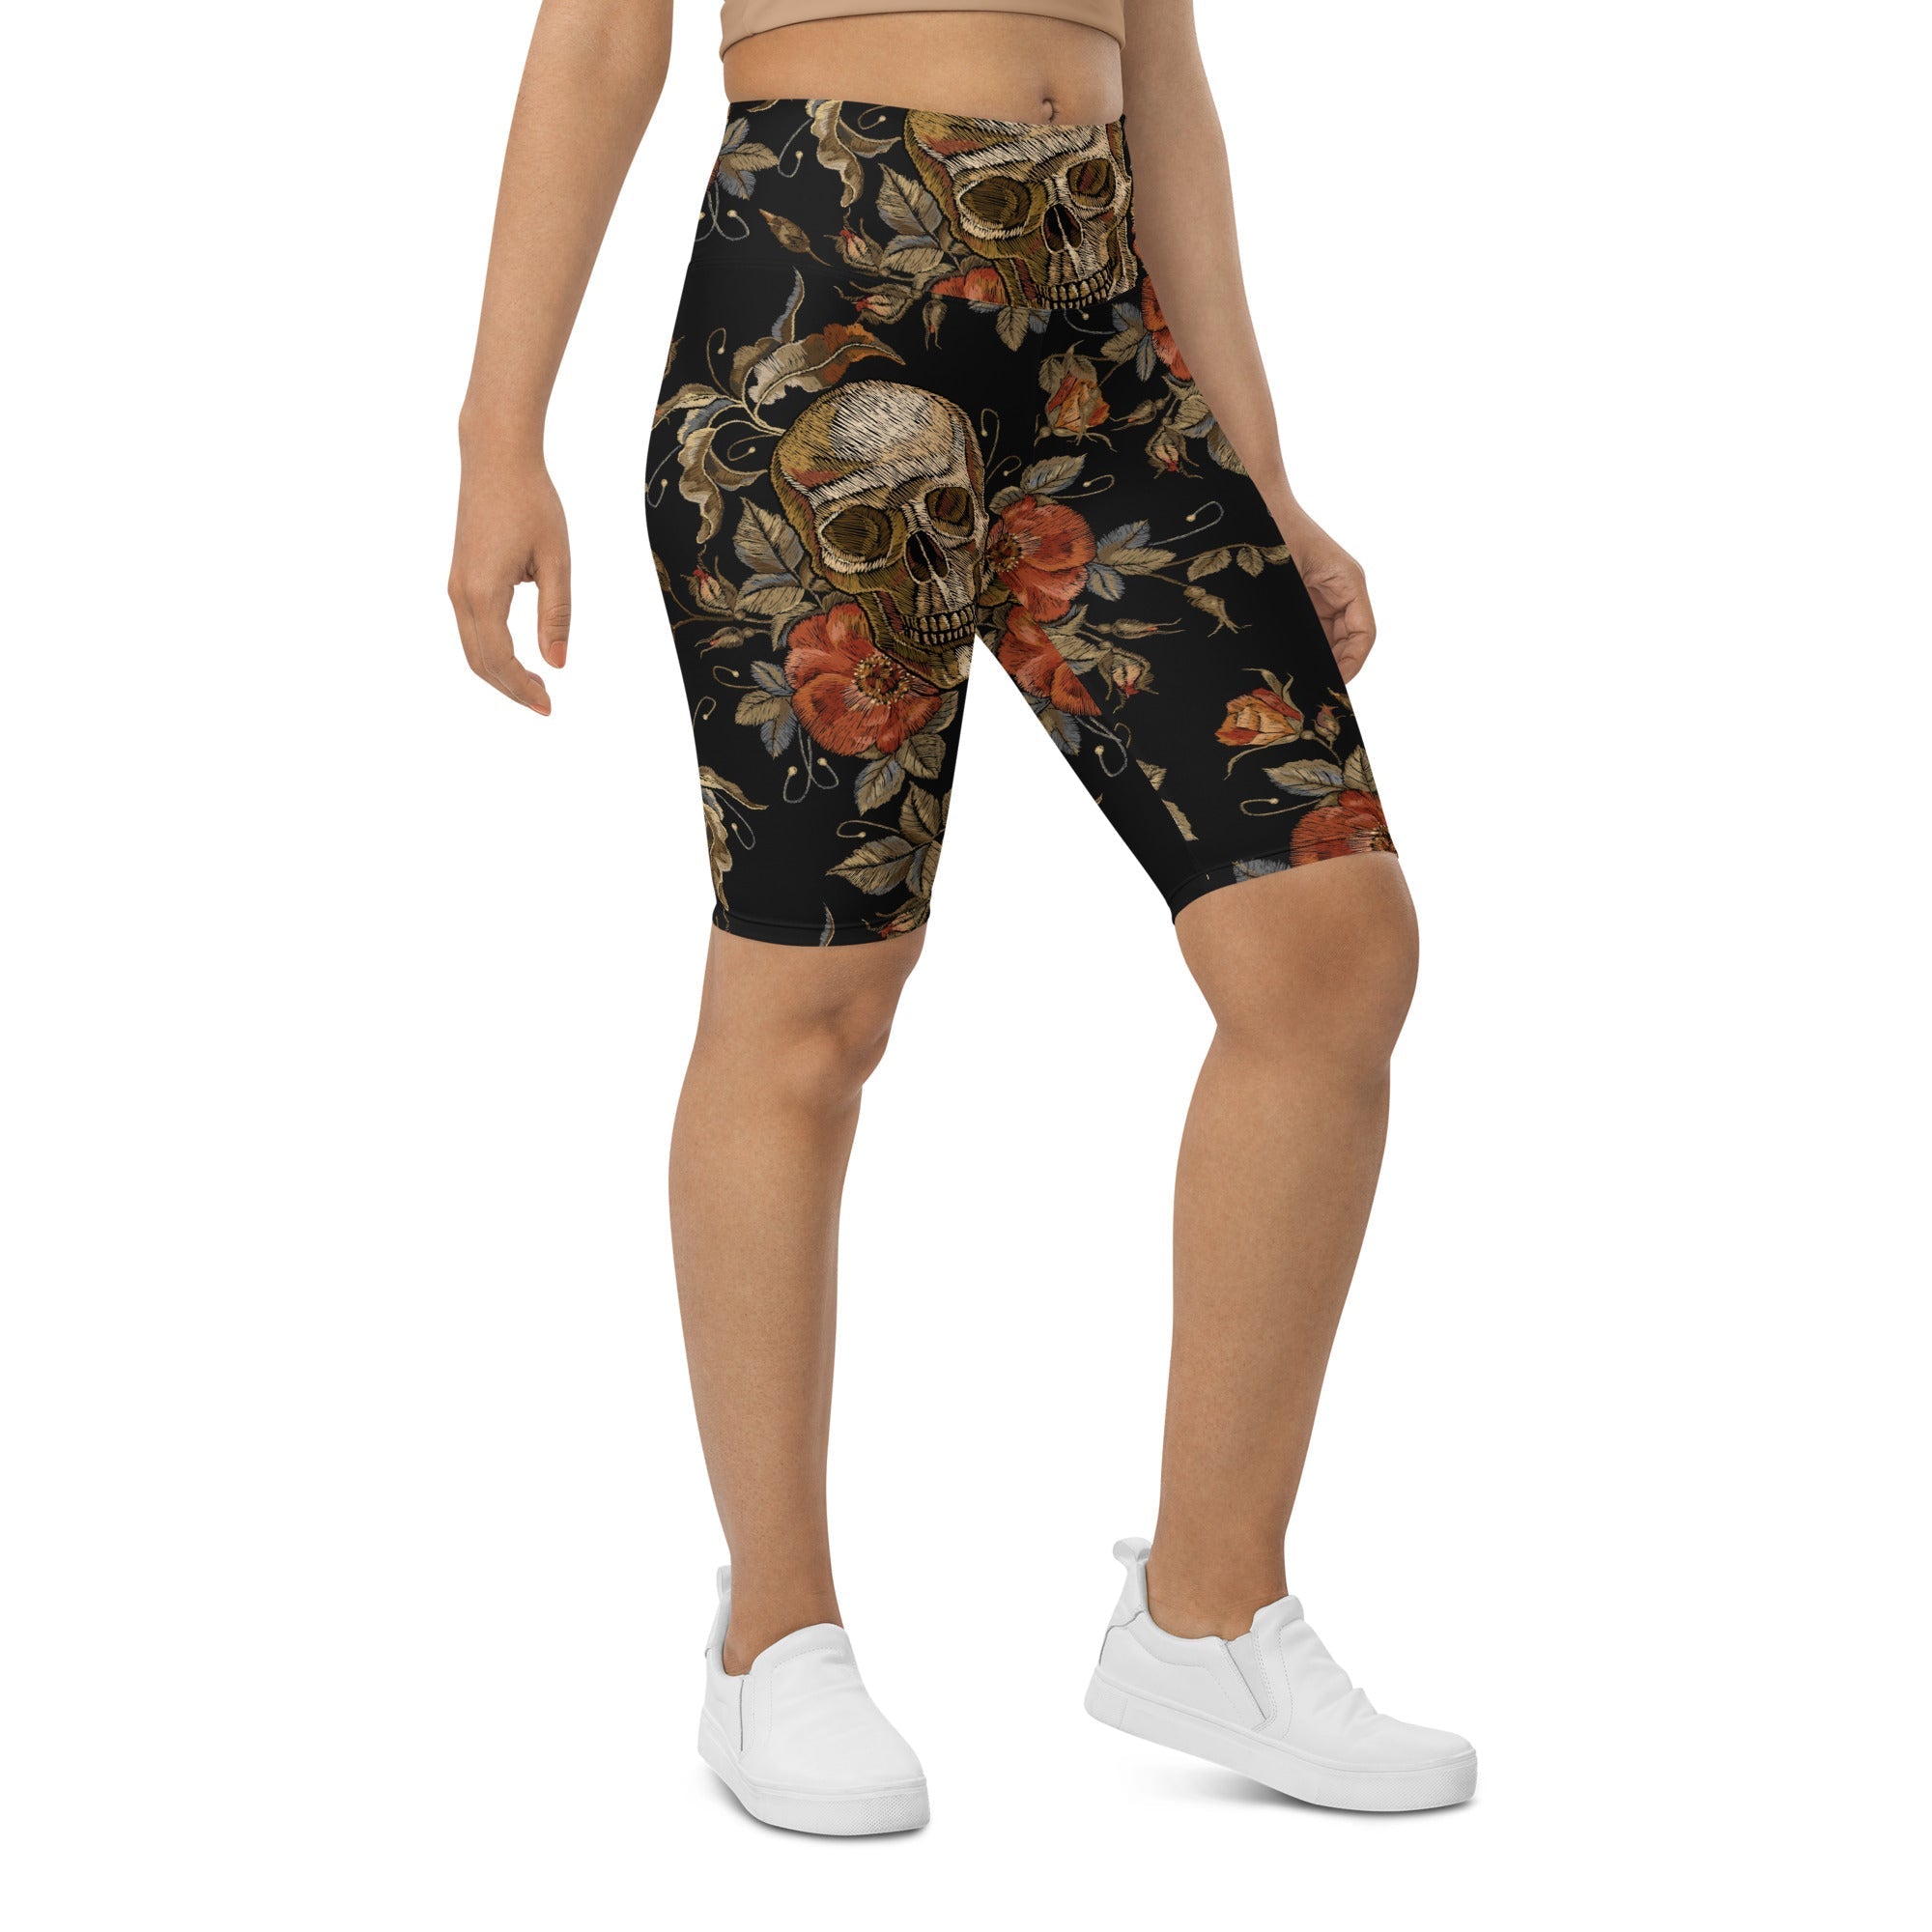 Embroidery Skull Biker Shorts